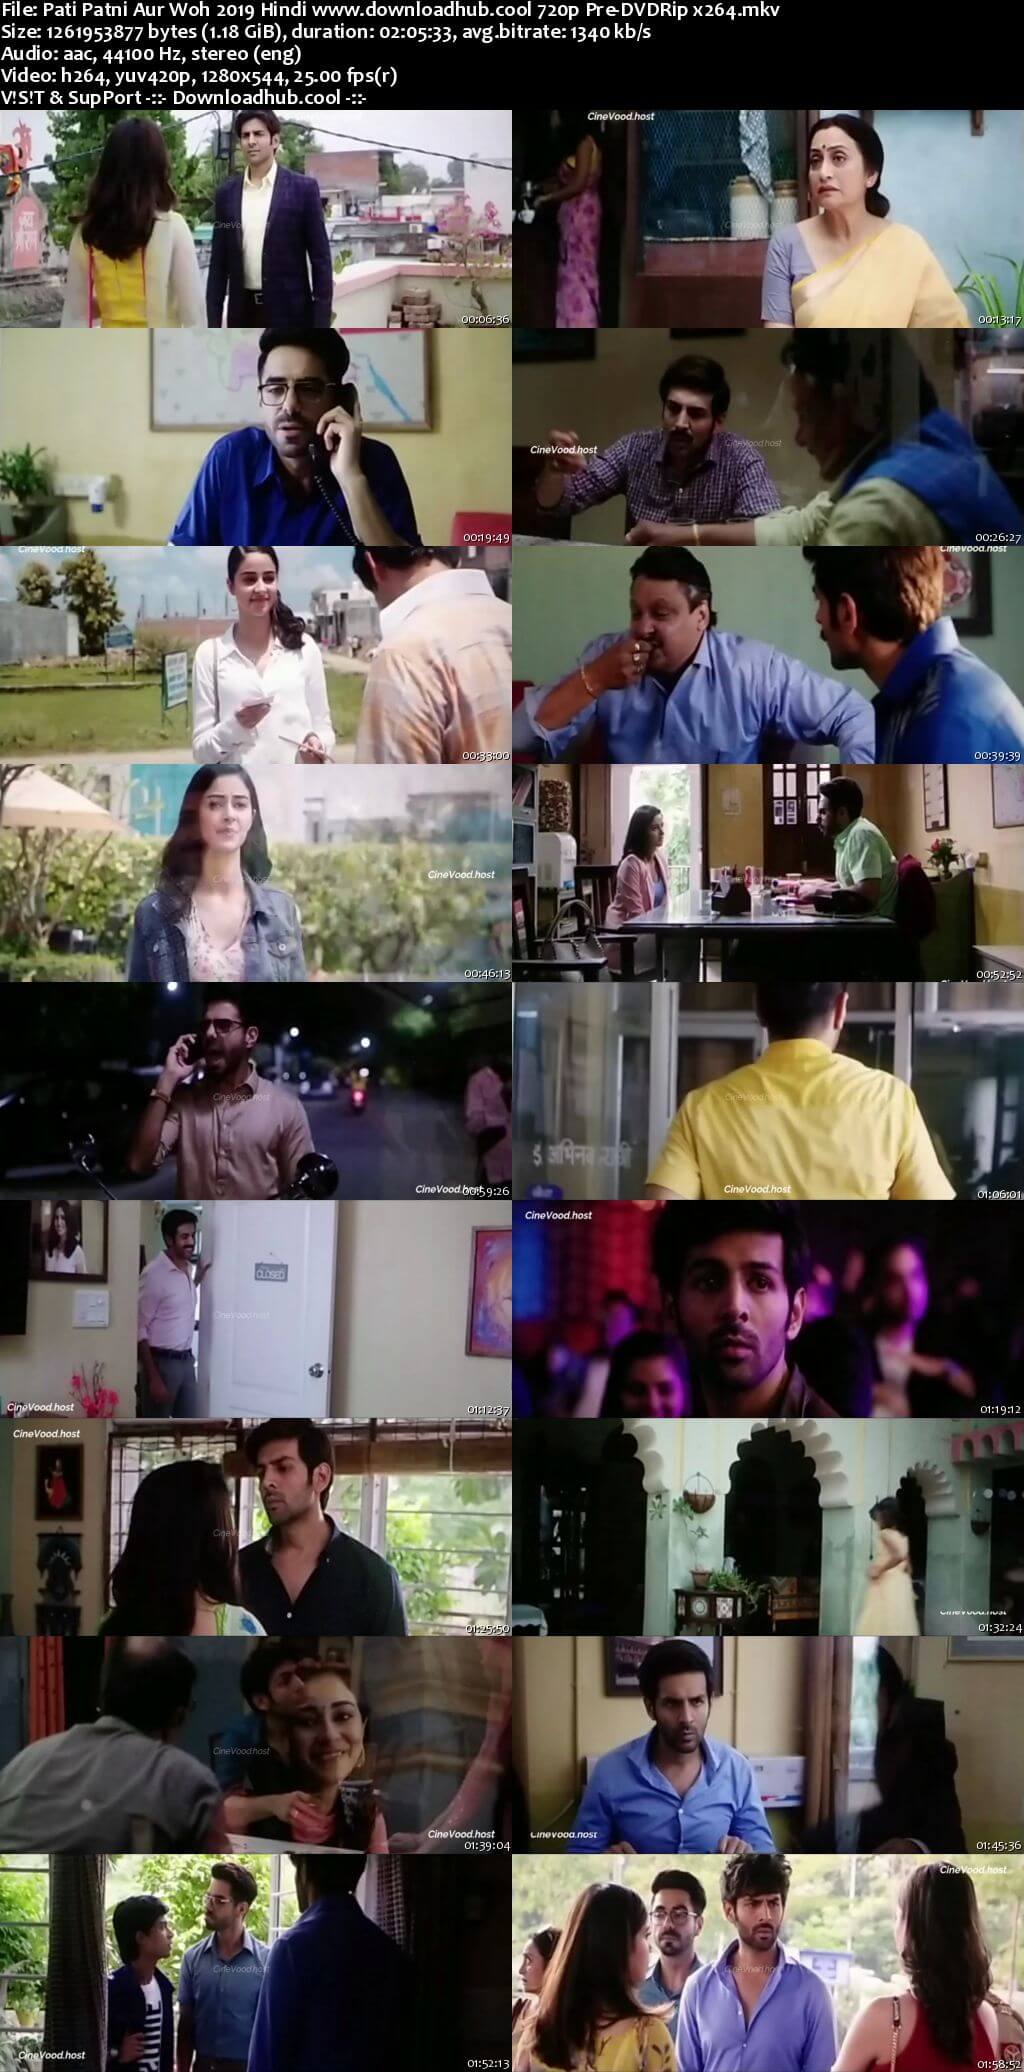 Pati Patni Aur Woh 2019 Hindi 720p 480p Pre-DVDRip x264